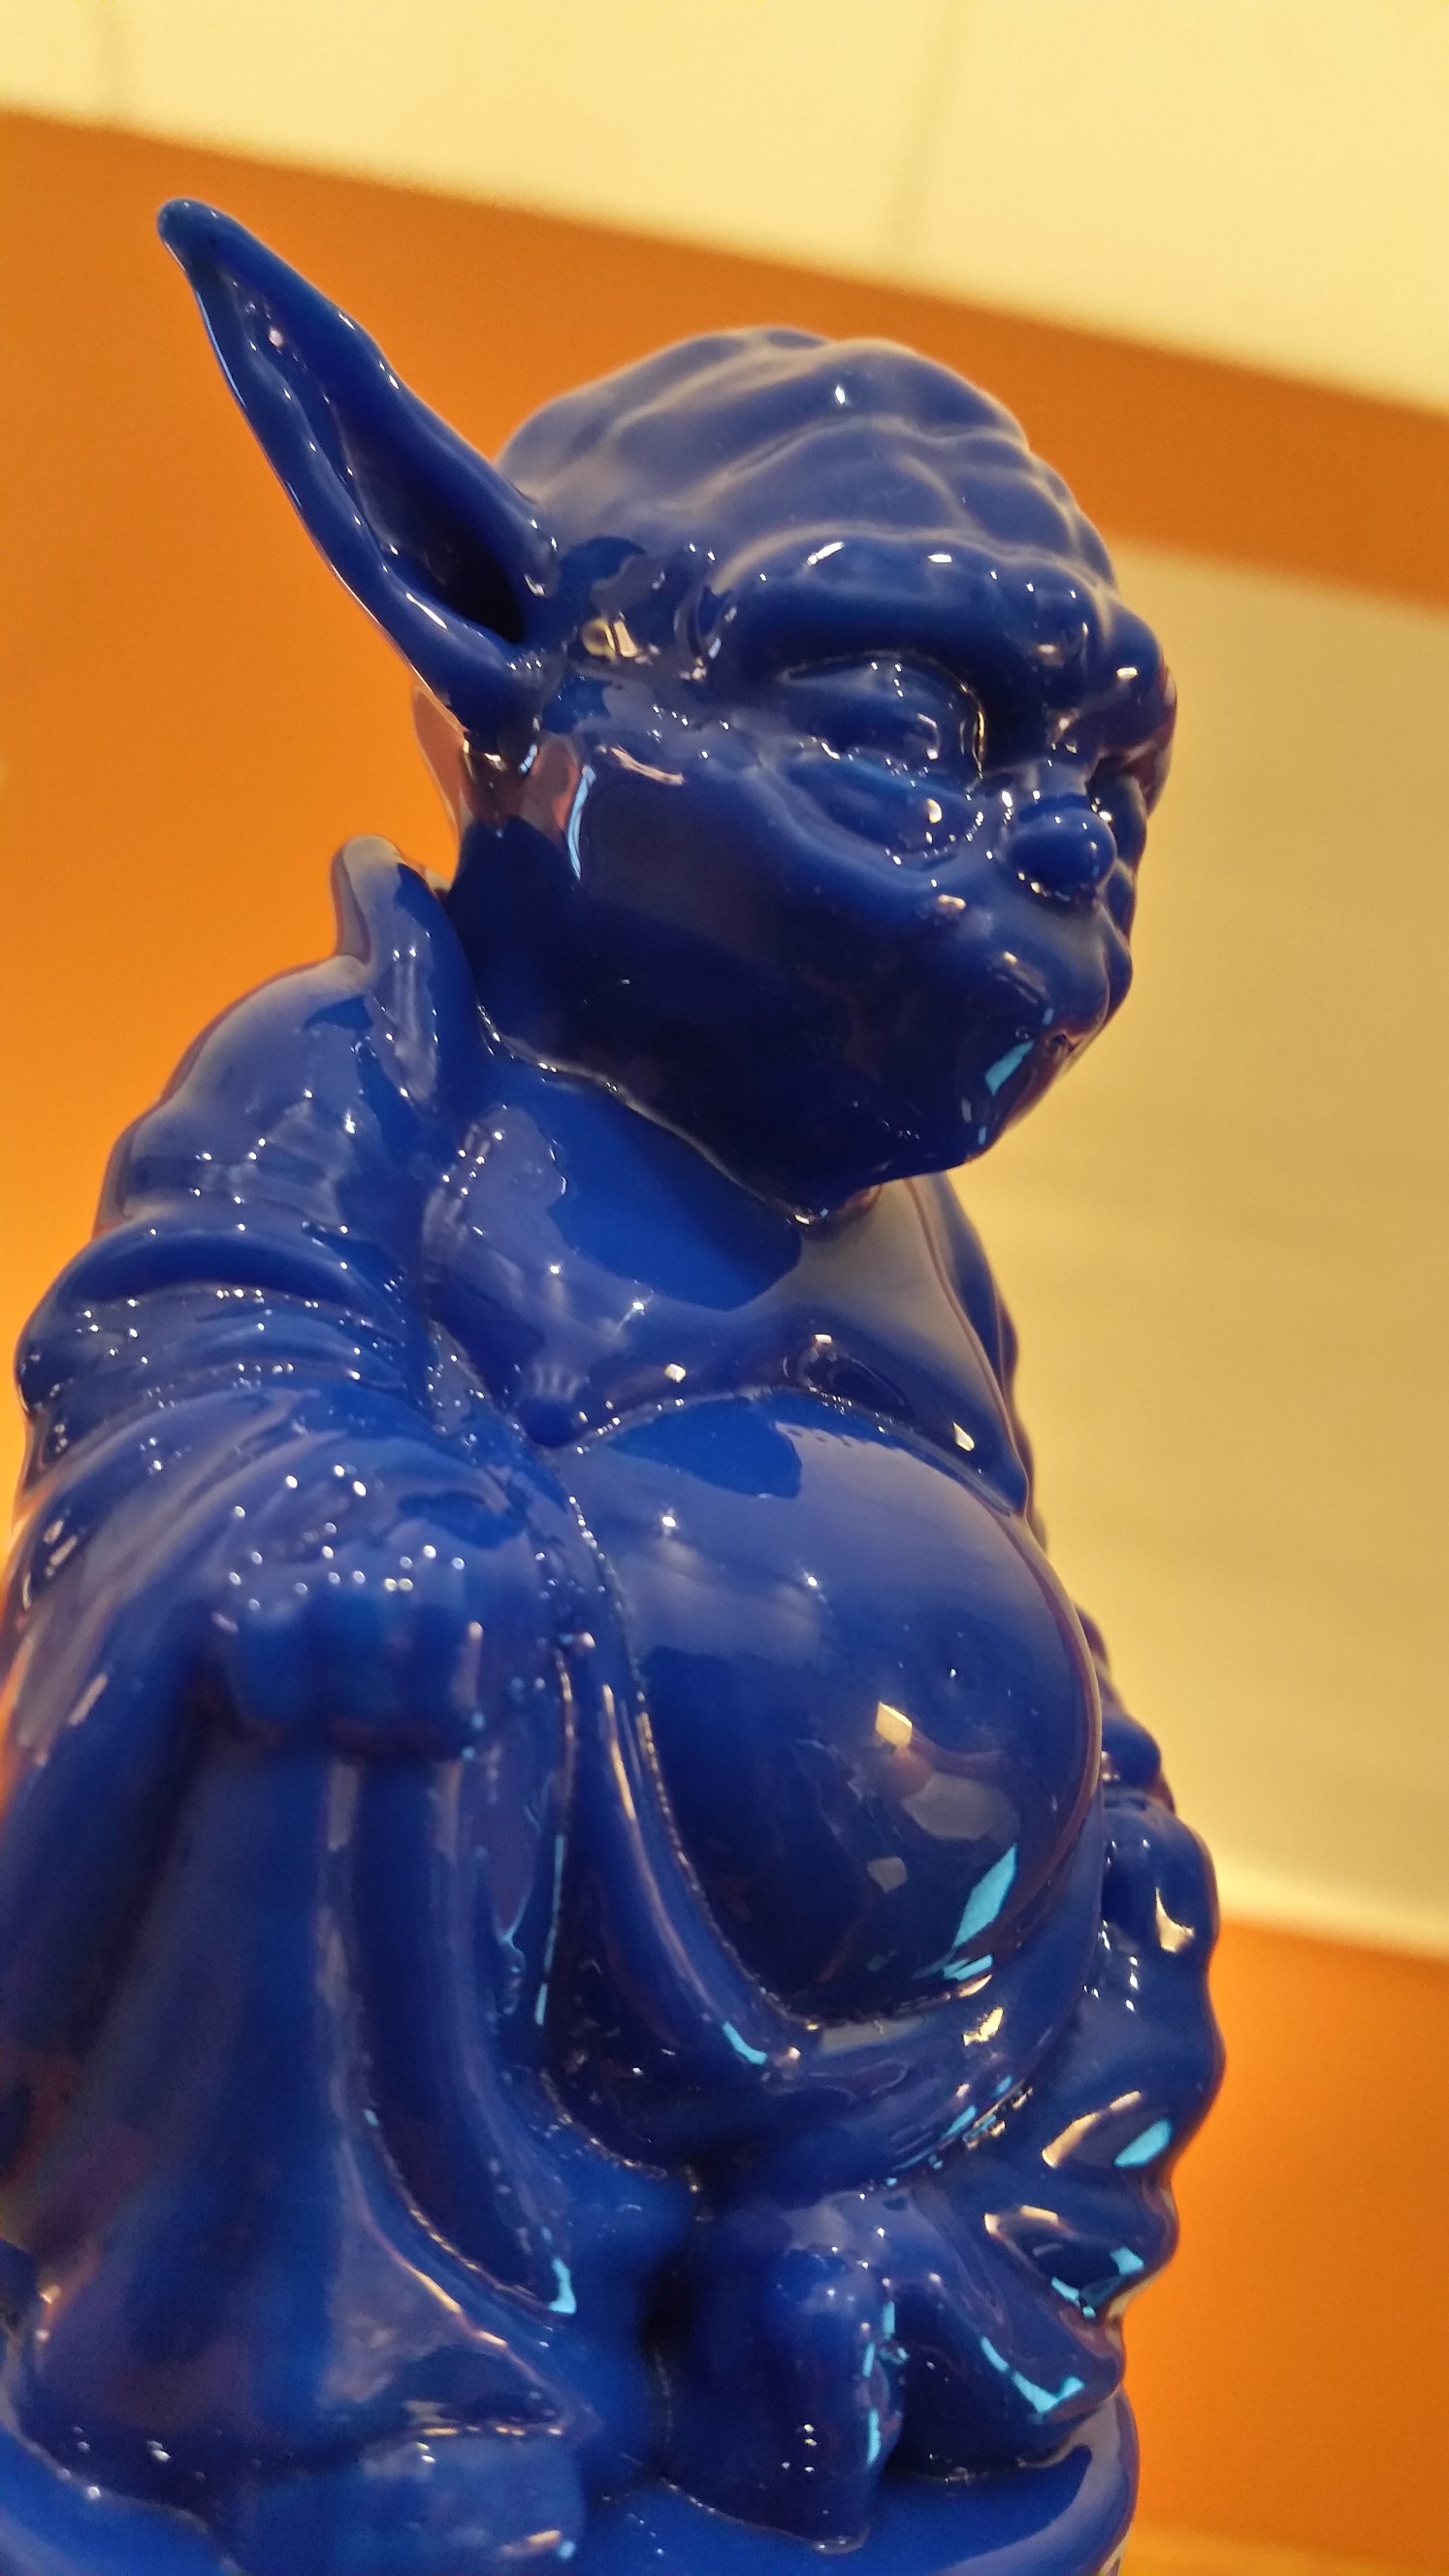 3D printed Boda (Yoda statue that resembles Buddha)